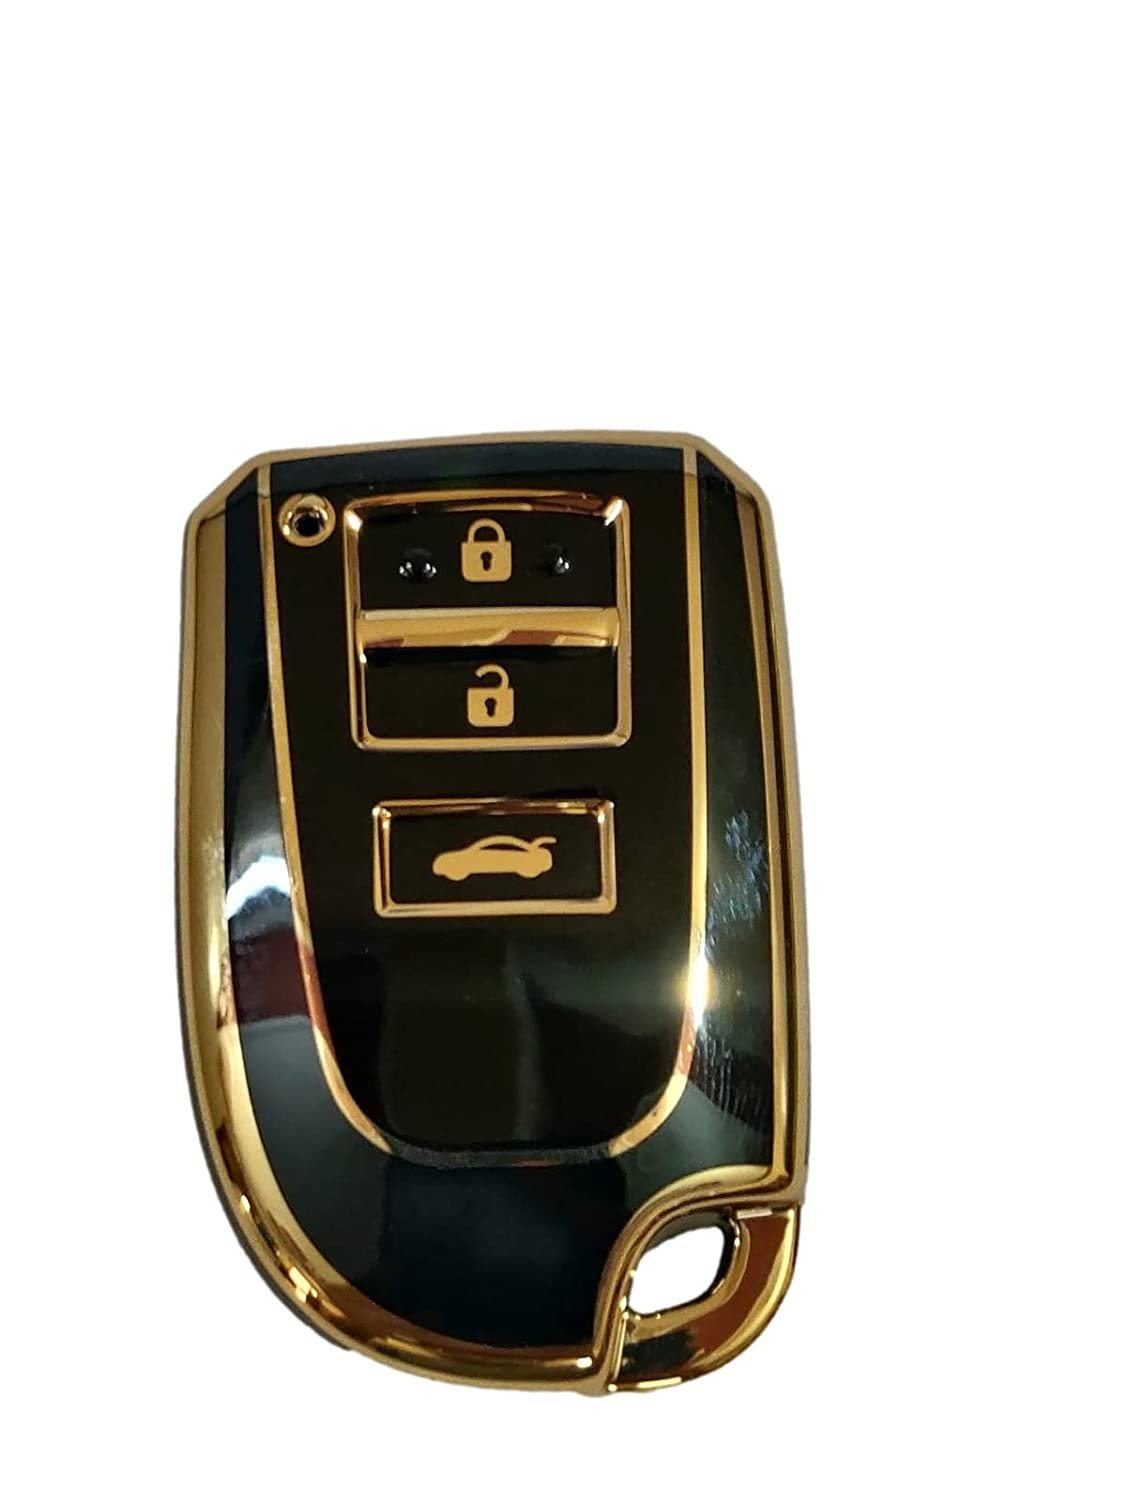  Tpu car key cover forToyota Yaris Camry Corolla Vios Smart Remote Protector  Image